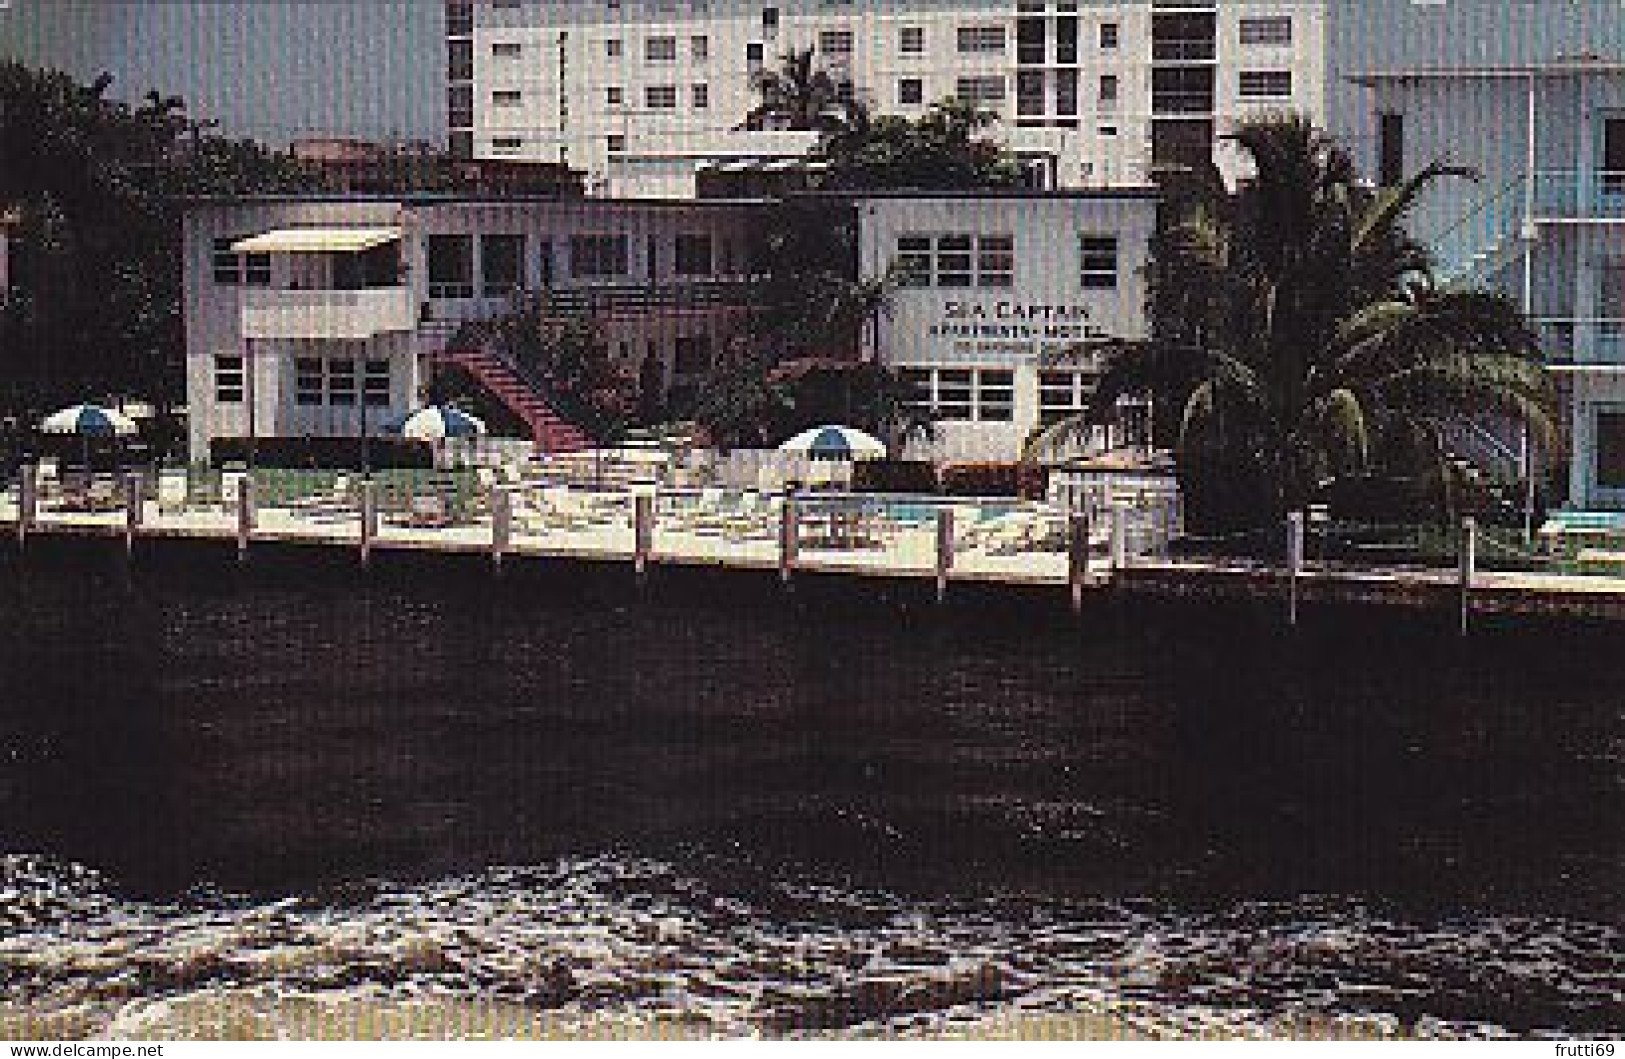 AK 194535 USA - Florida - Fort Lauderdale - Sea Captain Apartments & Motel - Fort Lauderdale